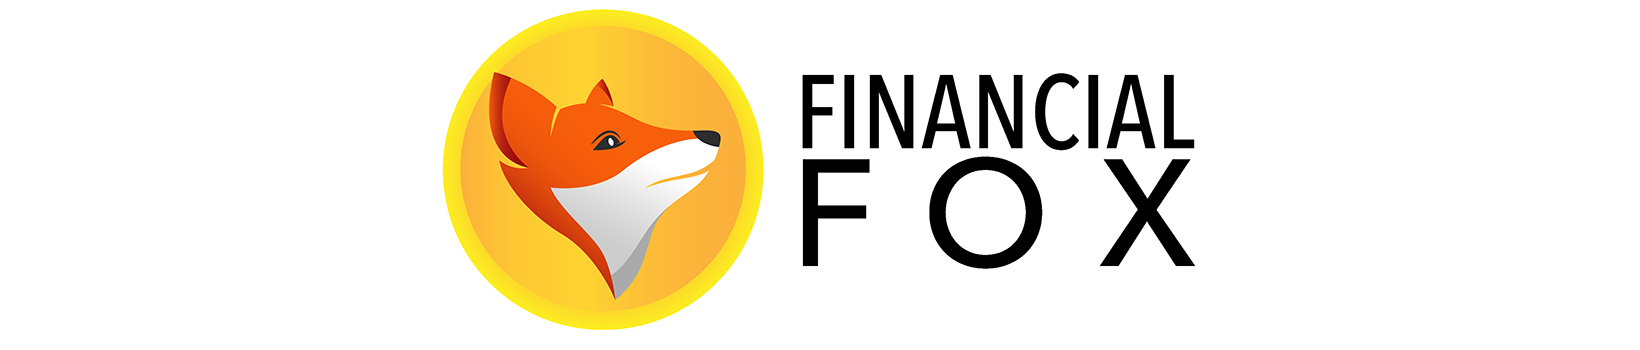 Financial Fox